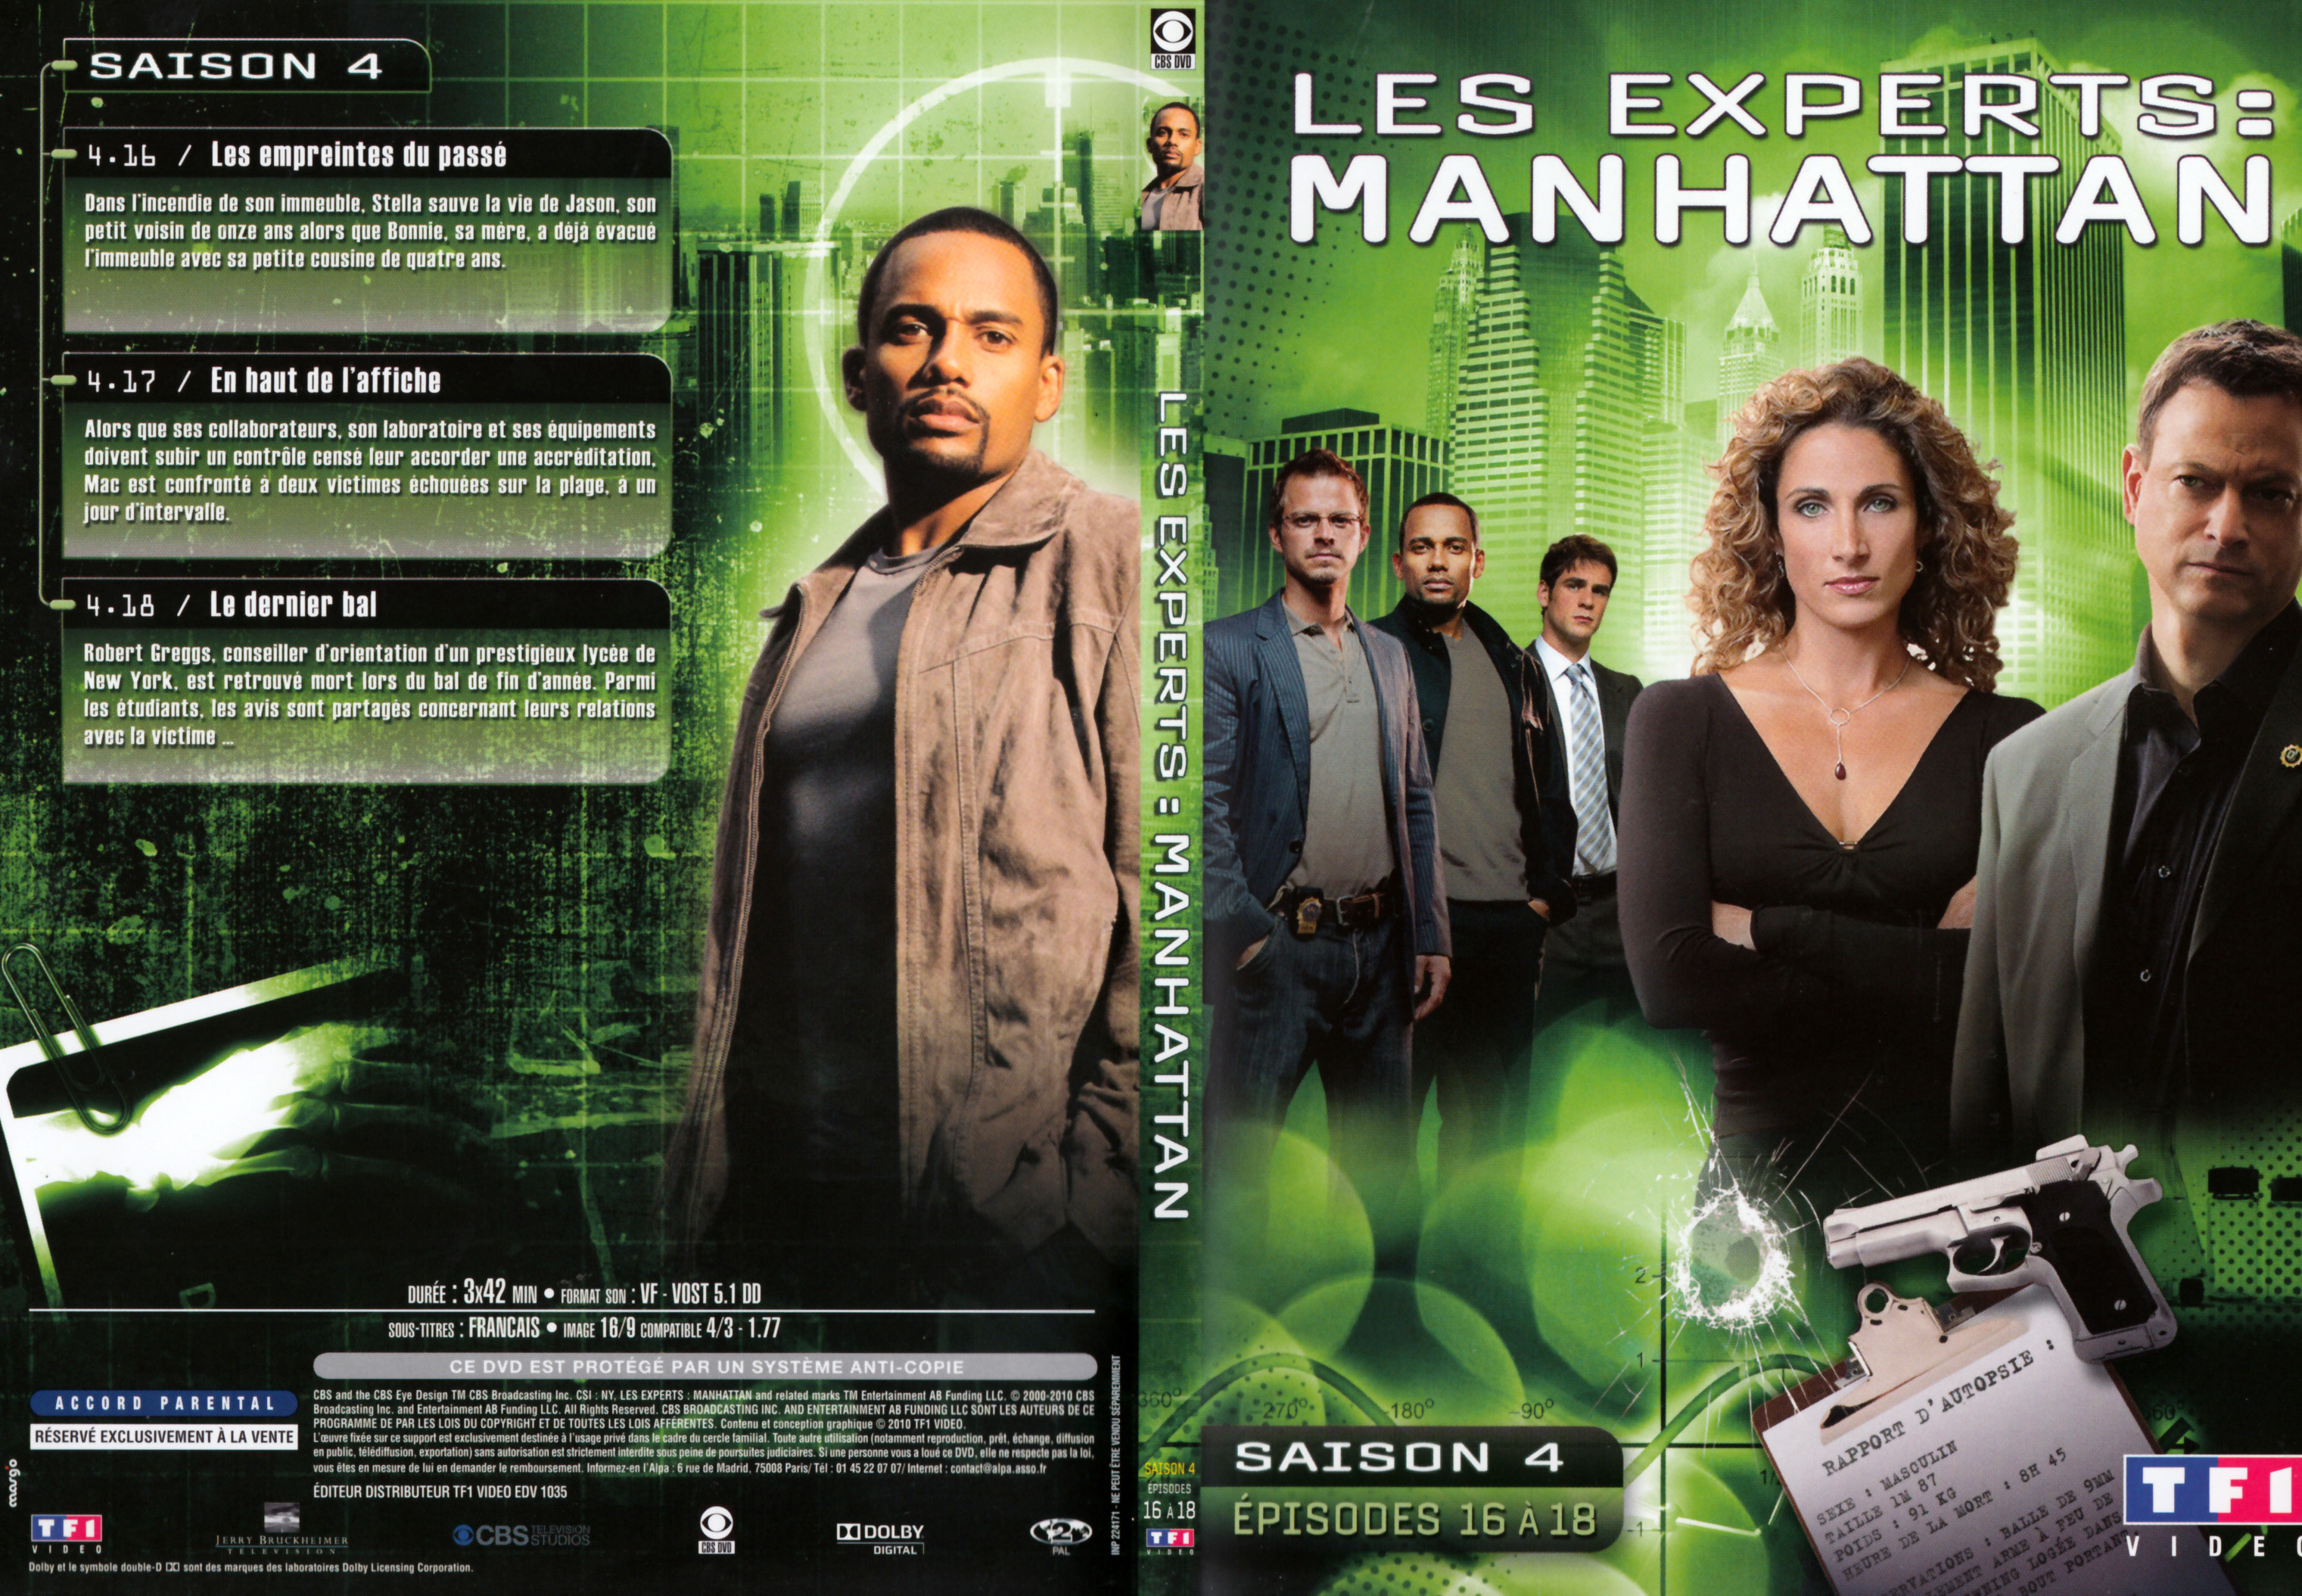 Jaquette DVD Les Experts Manhattan Saison 4 DVD 5